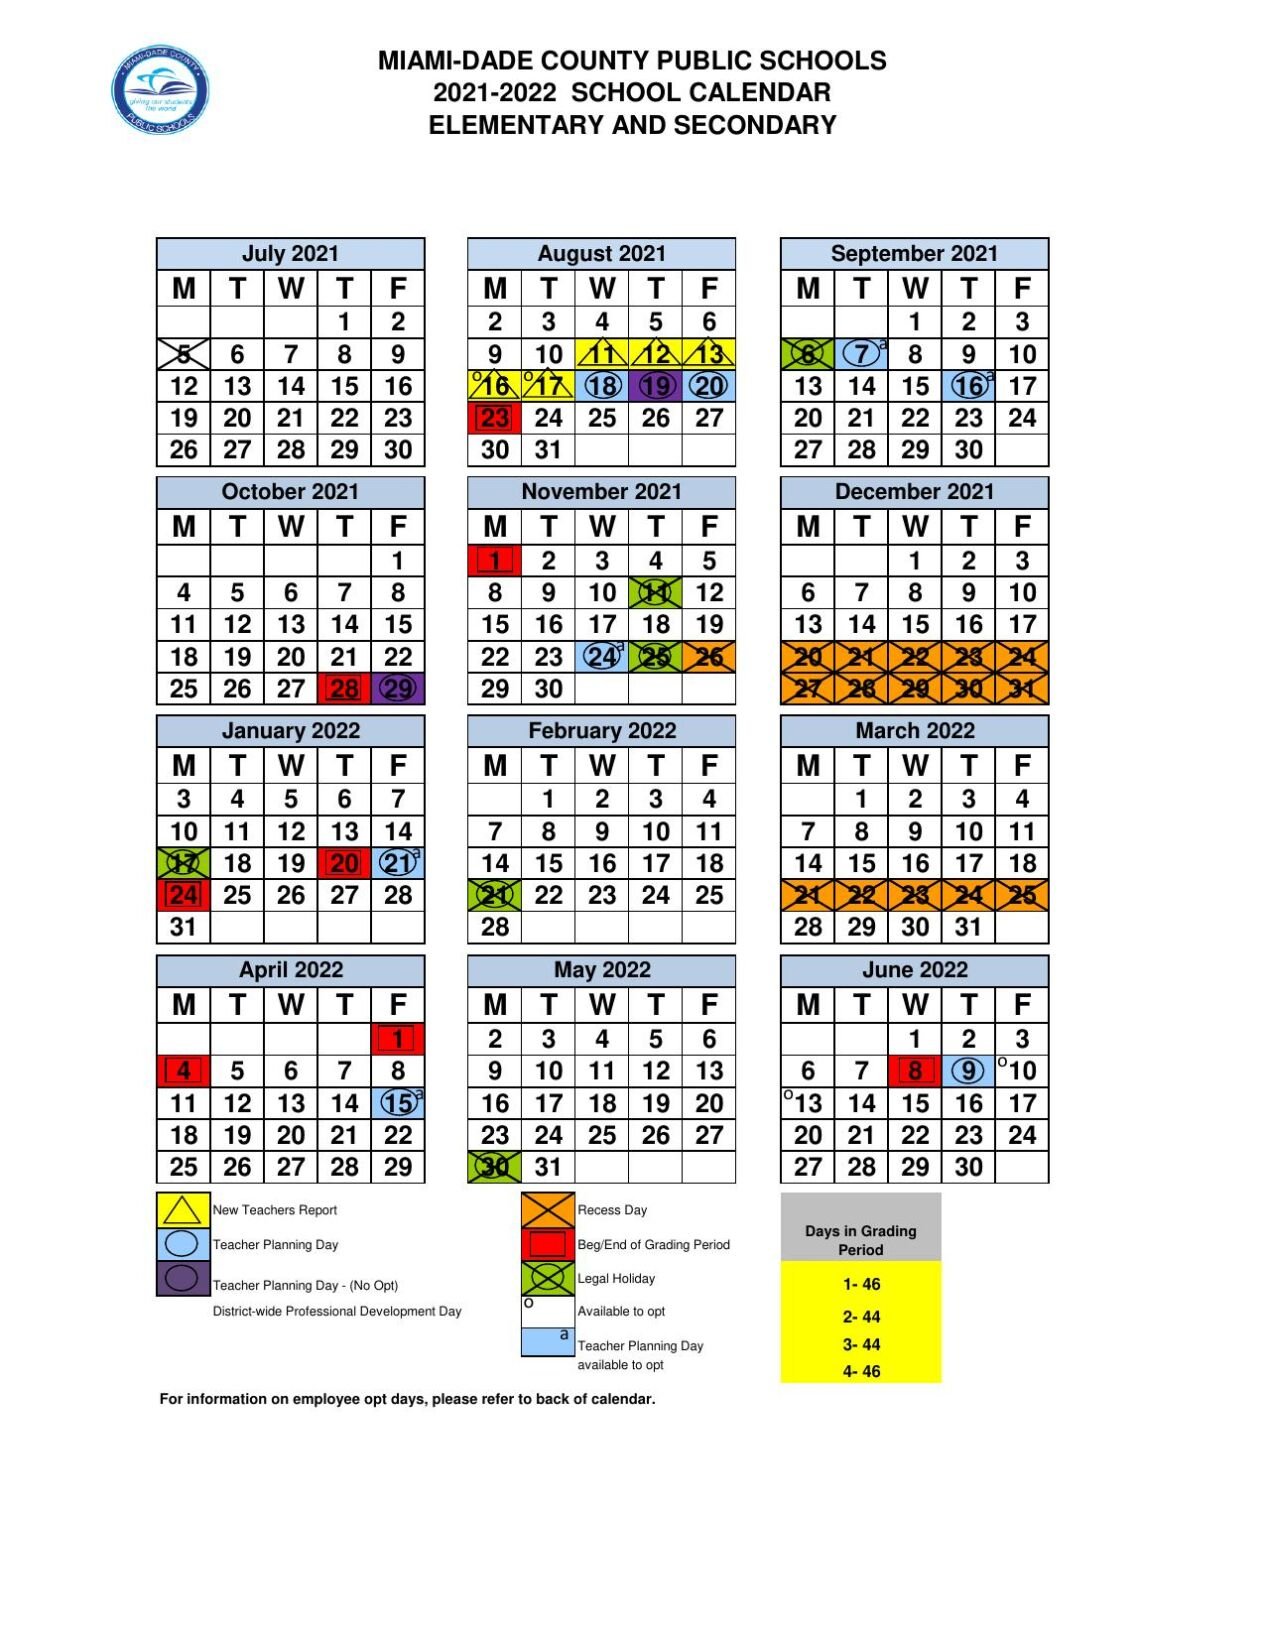 Emory Academic Calendar 2022 2023 Miami-Dade County Public Schools 2021-22 Calendar | Education |  Miamitimesonline.com